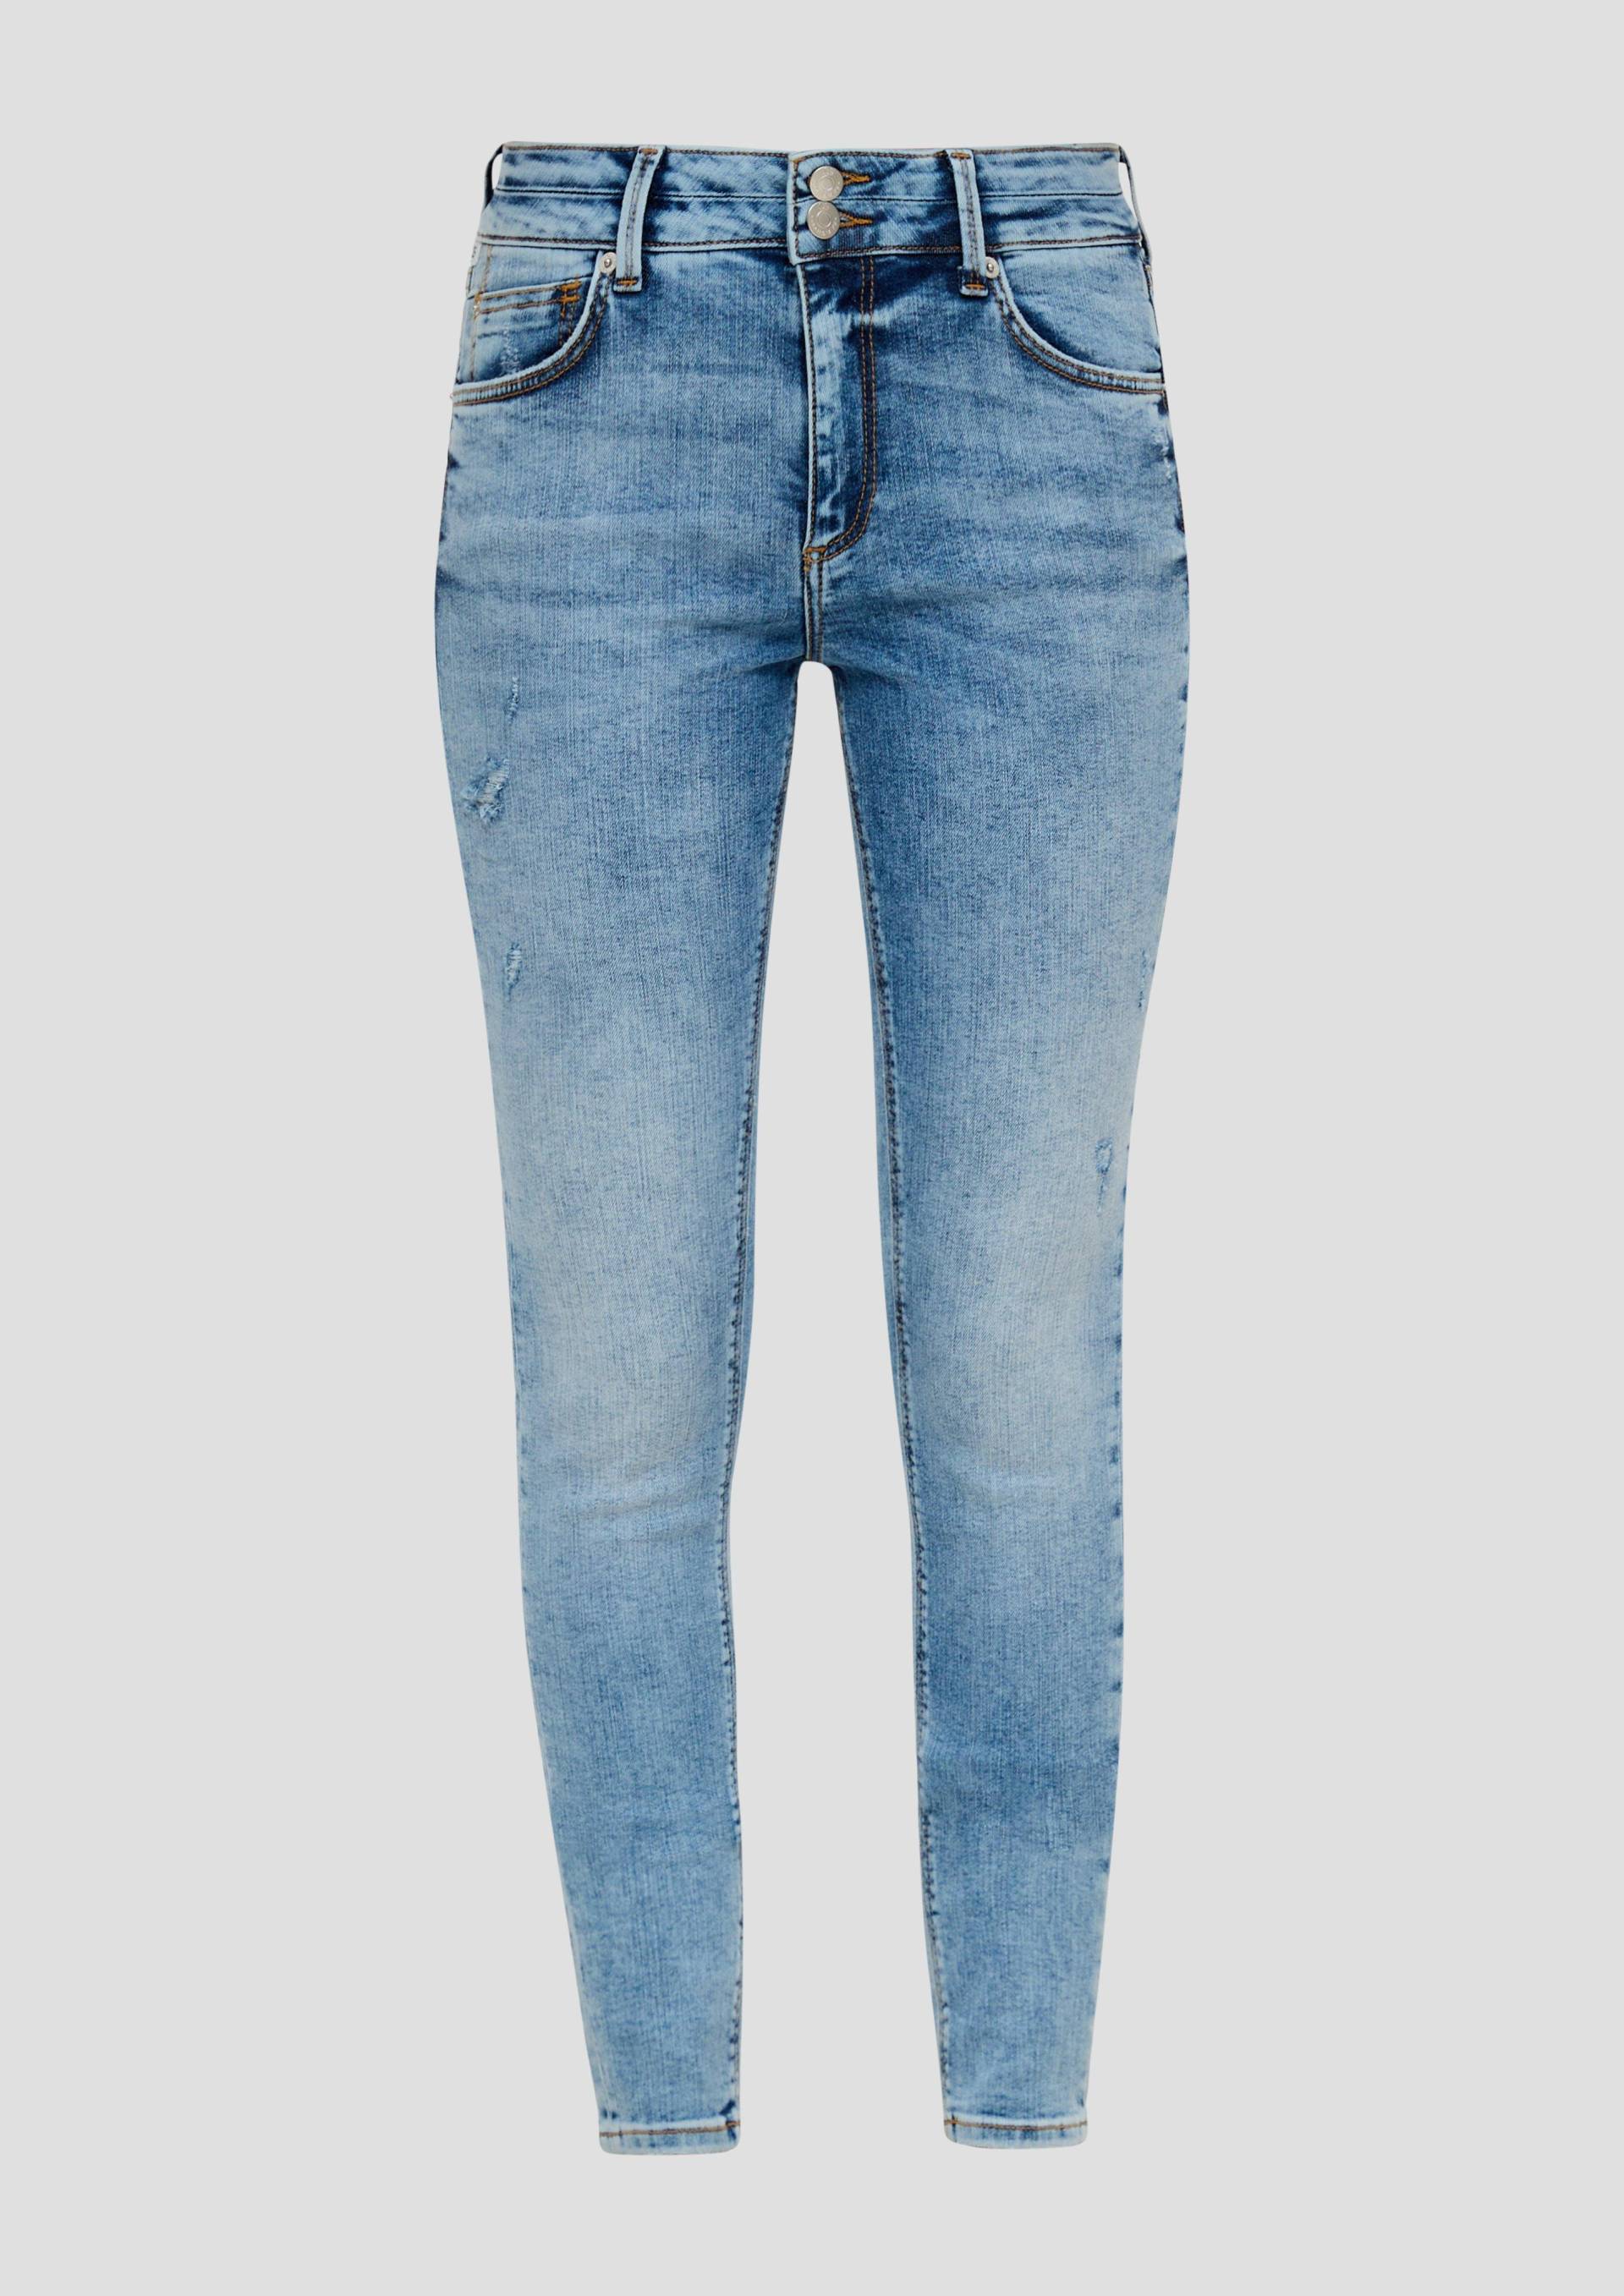 QS - Jeans Sadie / Skinny Fit / Mid Rise / Skinny Leg, Damen, blau von QS